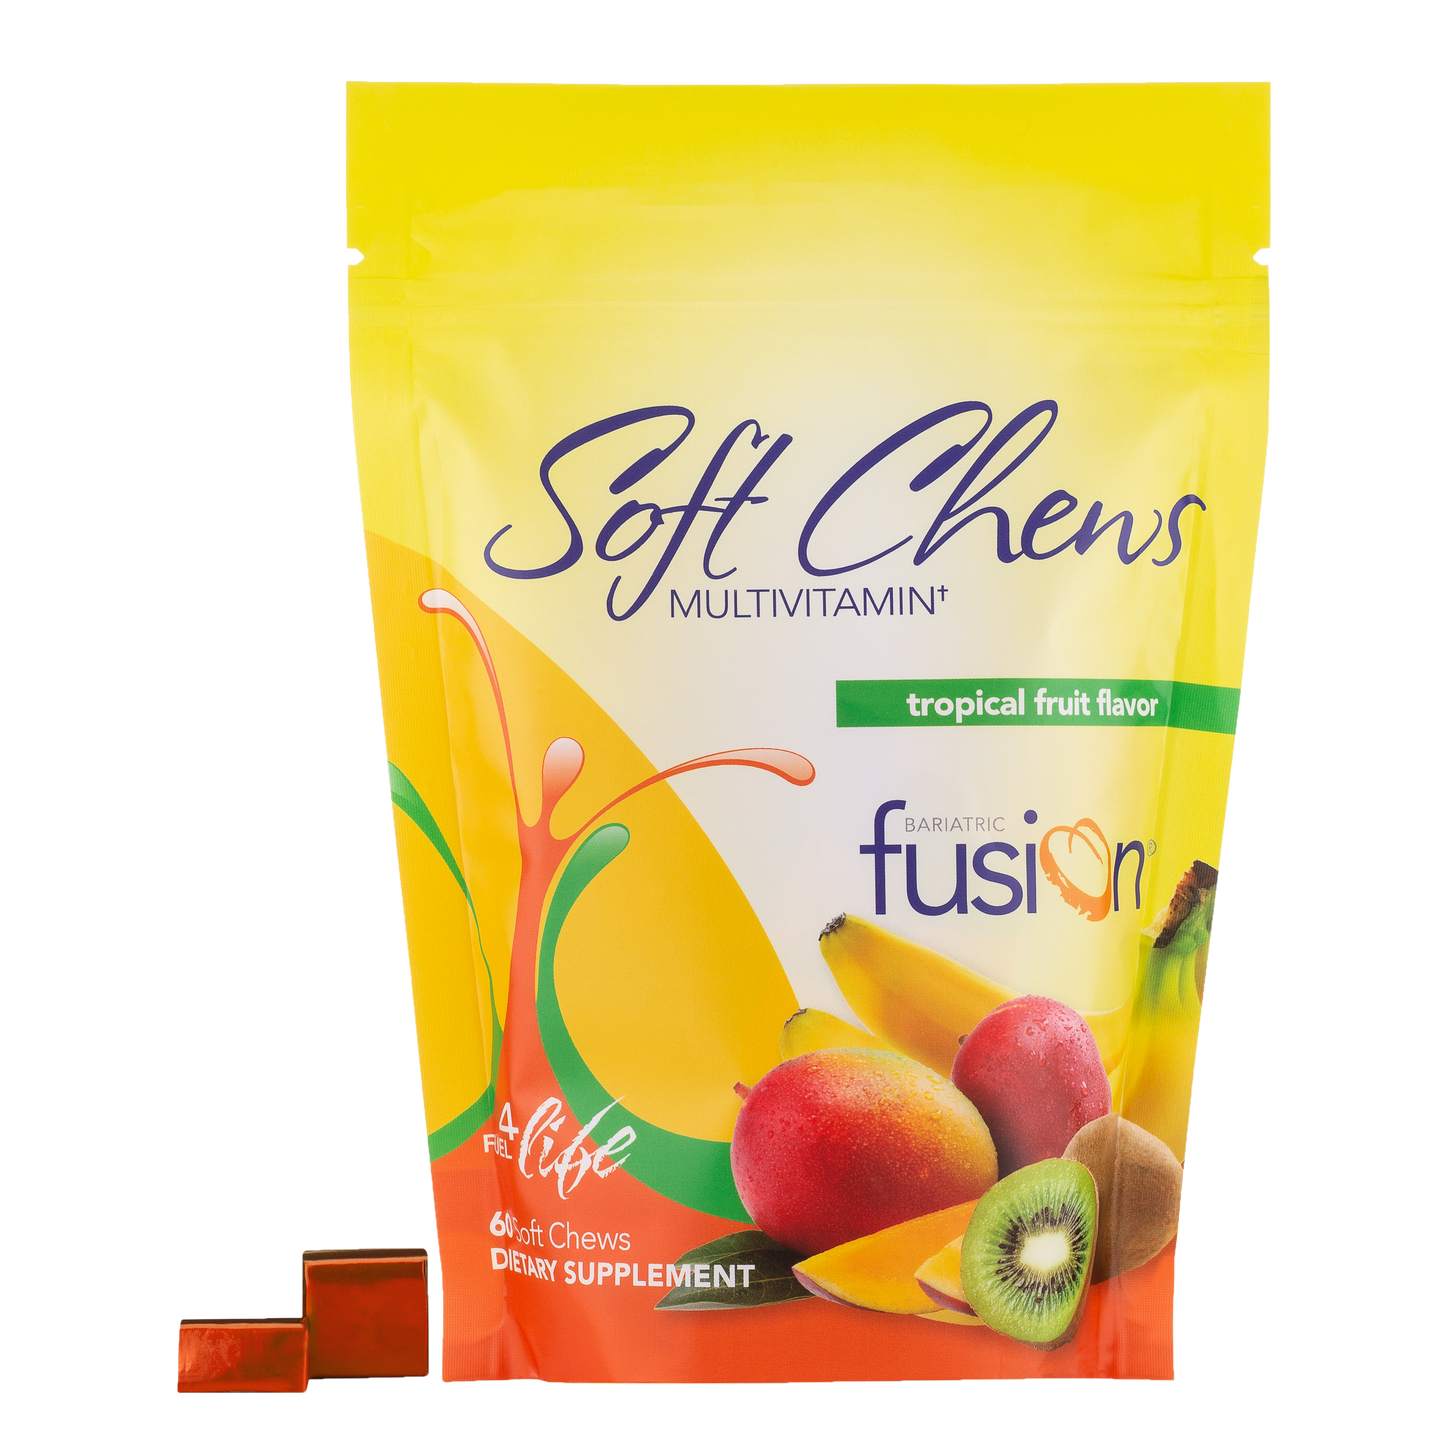 Tropical Fruit Soft Chews Bariatric Multivitamin - Bariatric Fusion